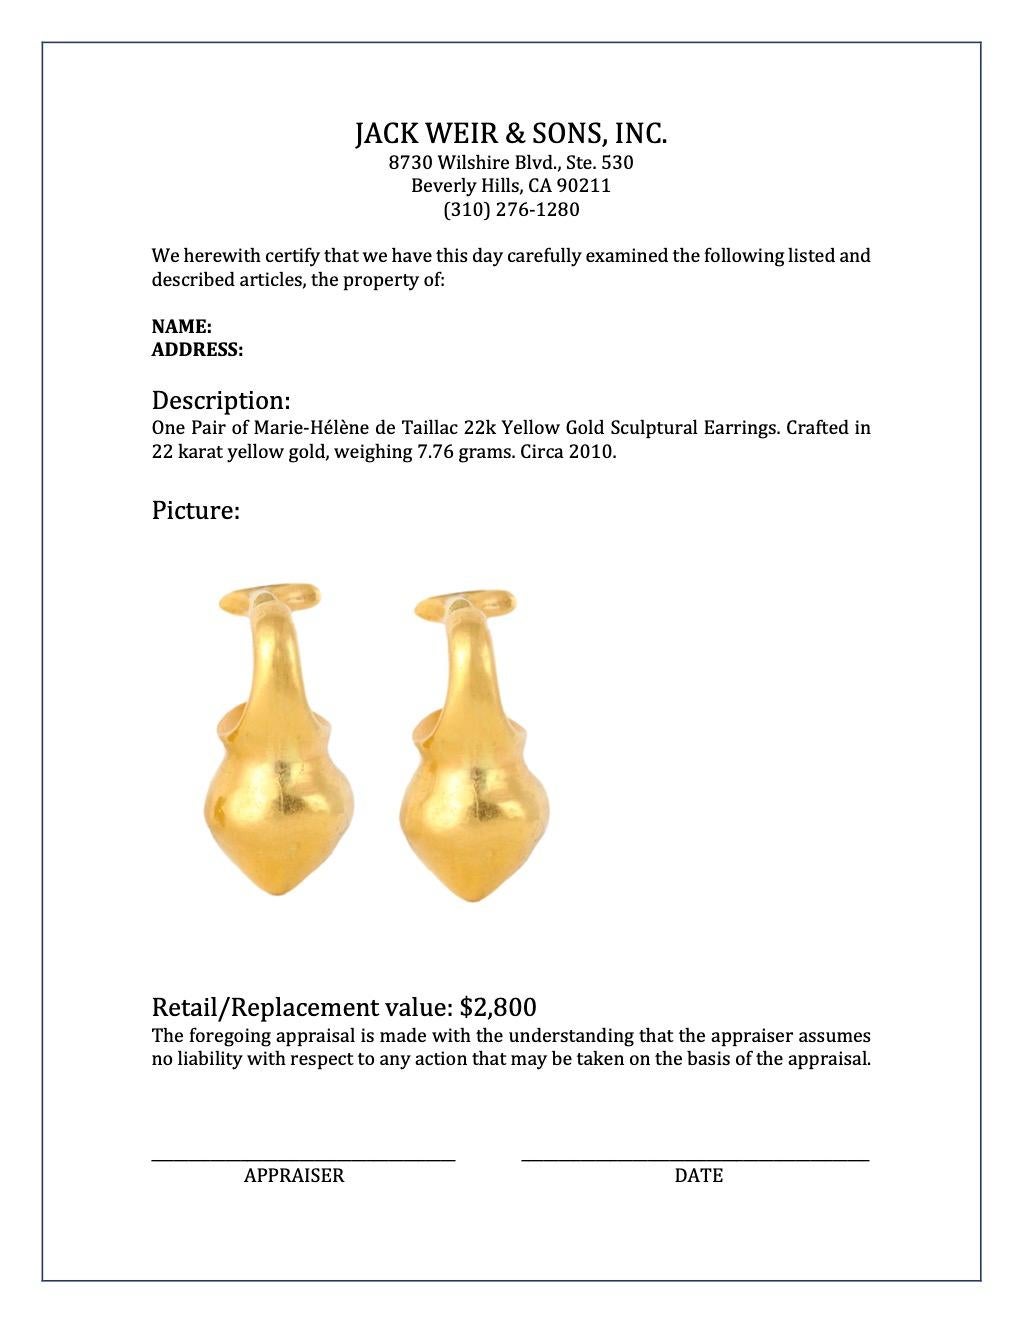 Marie-Hélène de Taillac 22k Yellow Gold Sculptural Earrings 3